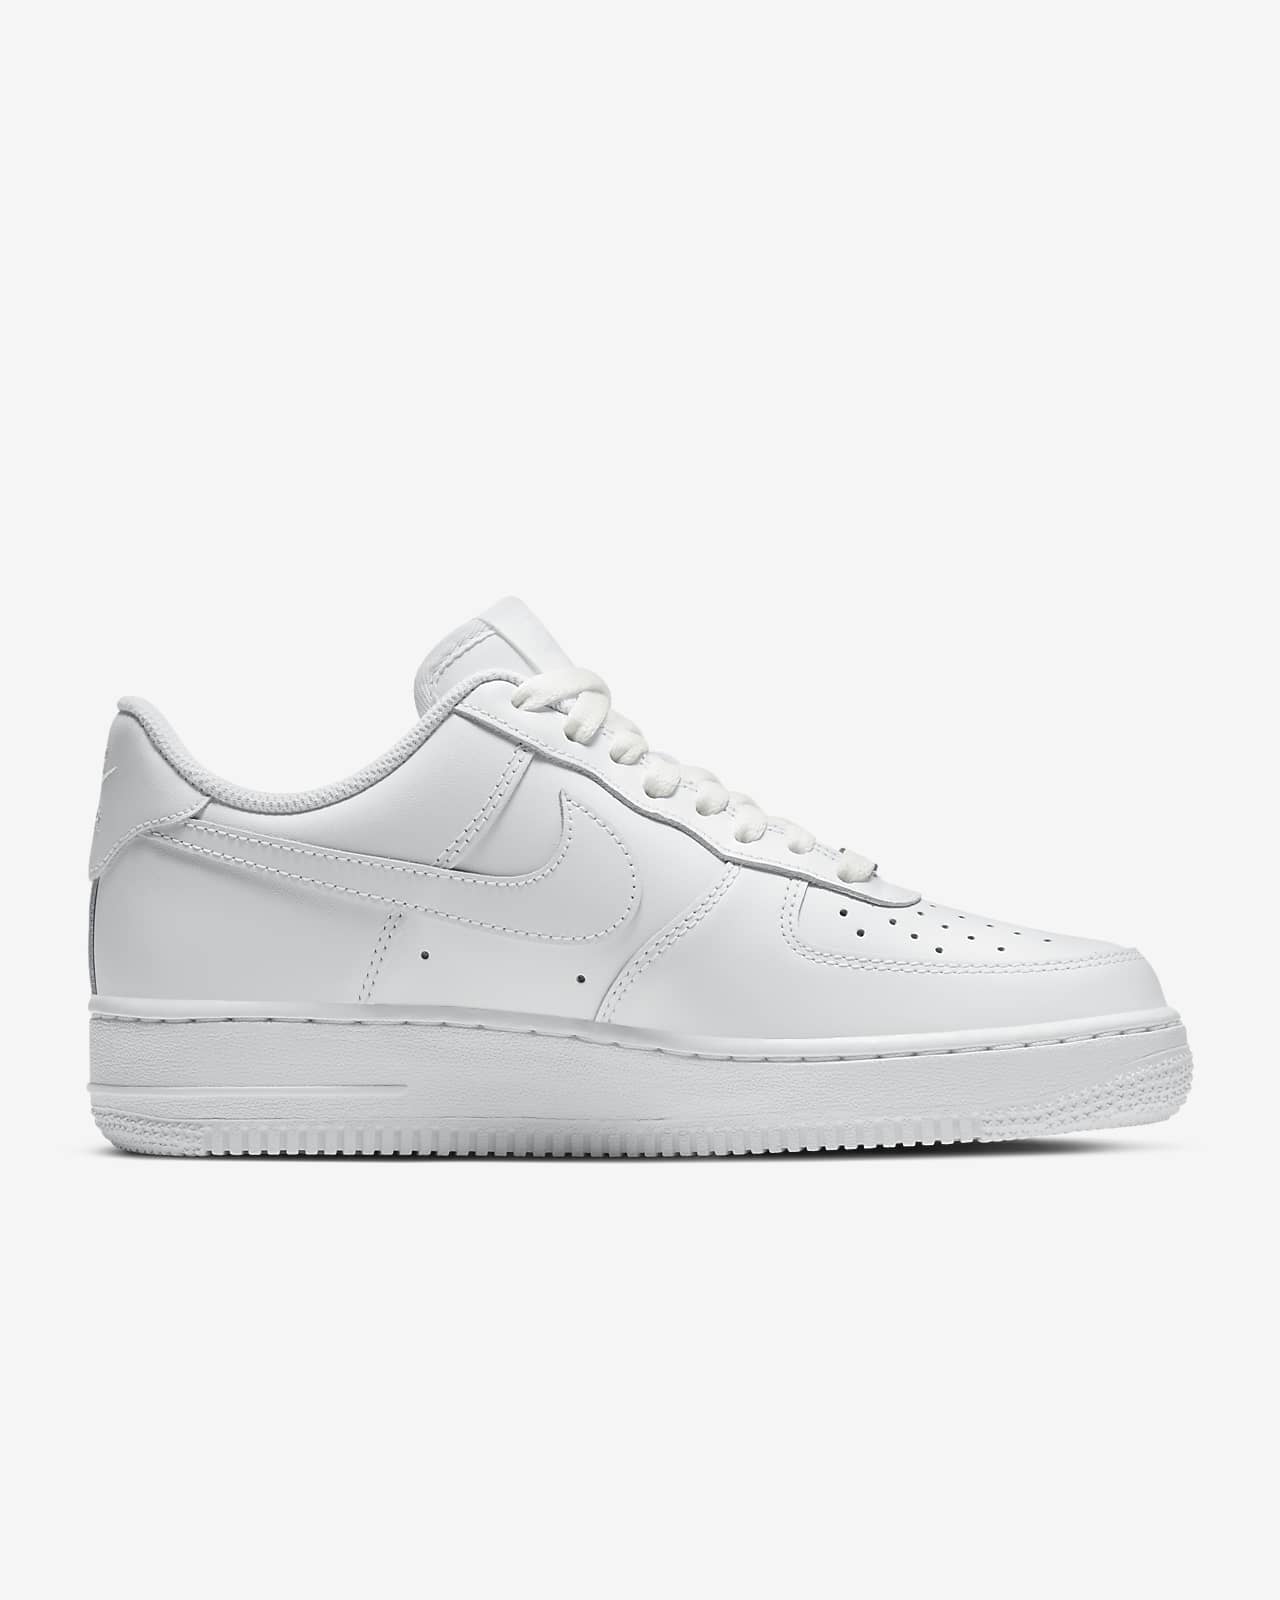 nike air force 1 07 women's shoe white